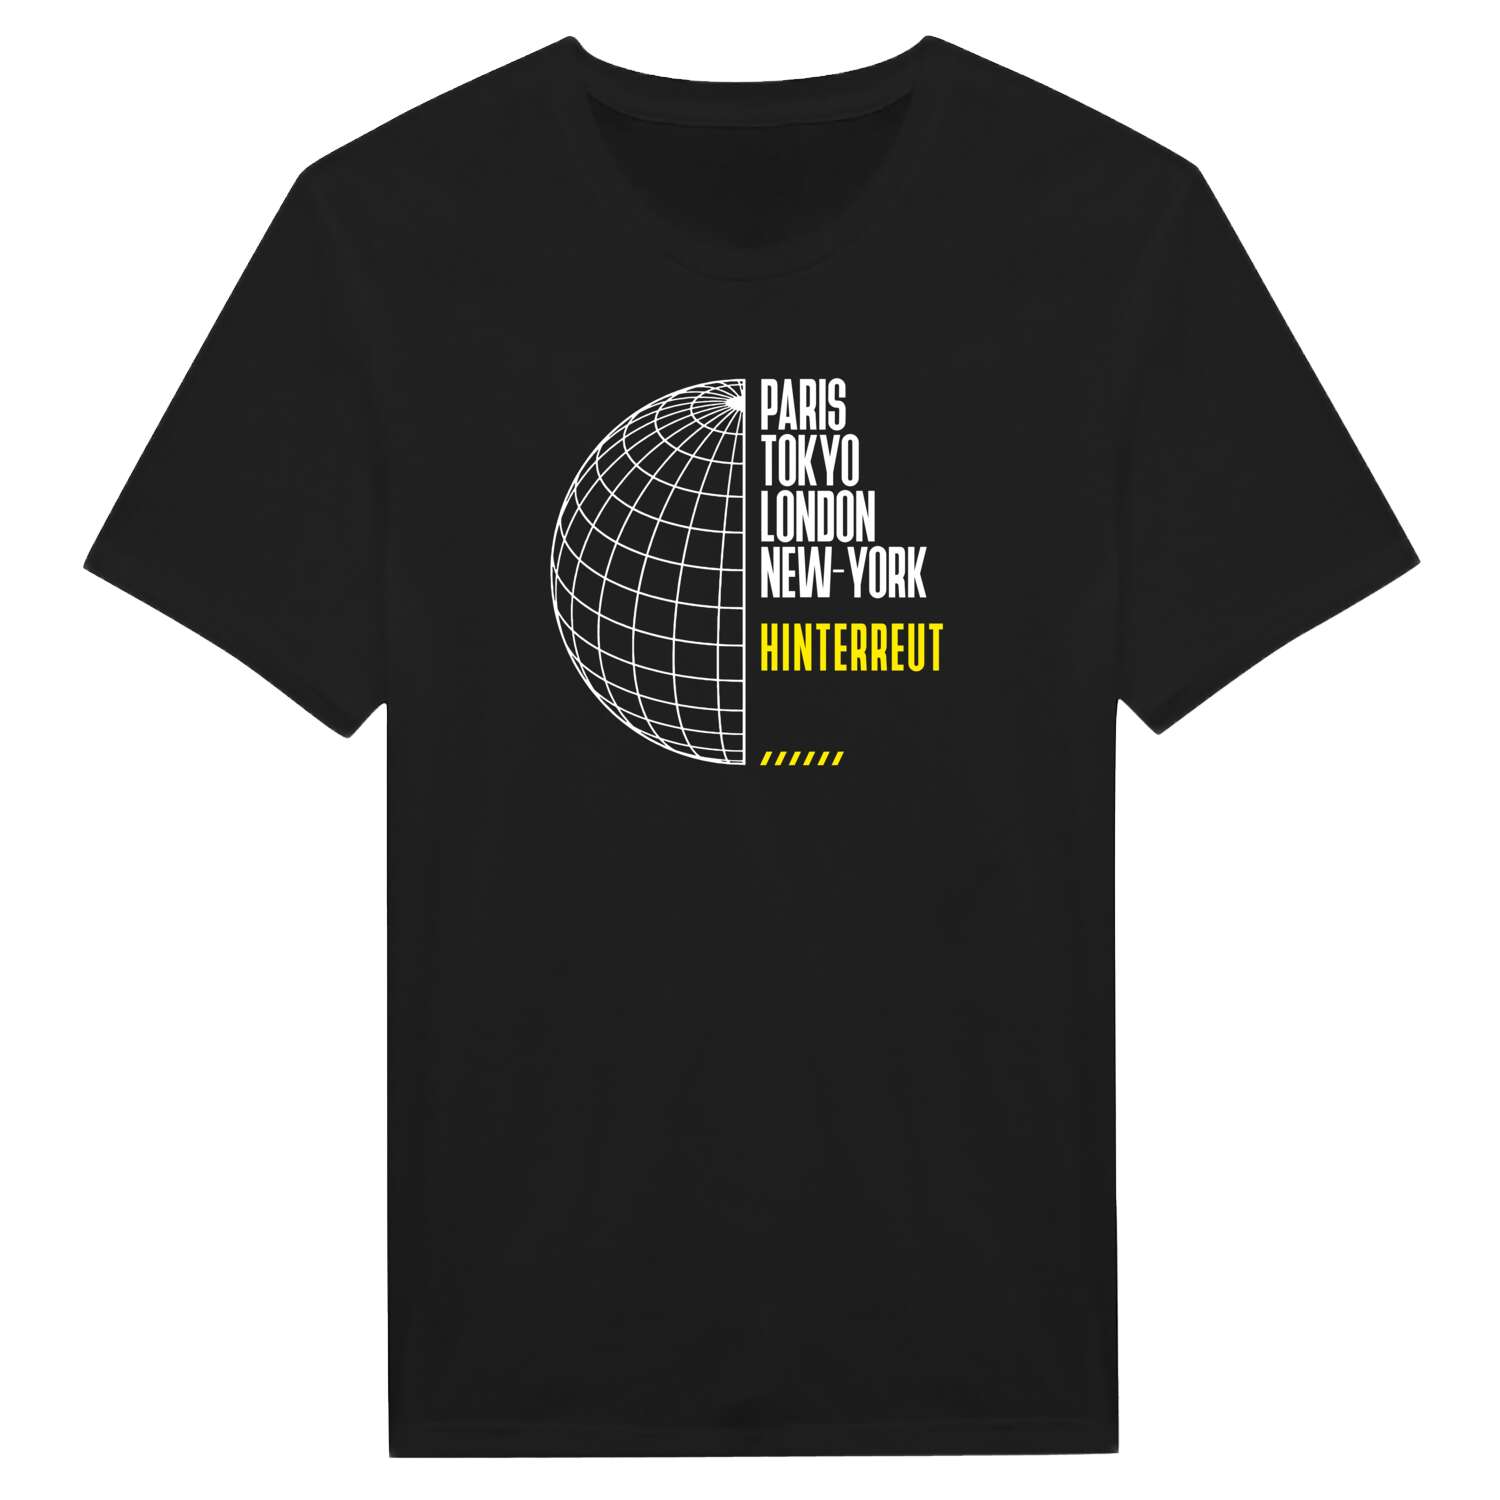 Hinterreut T-Shirt »Paris Tokyo London«